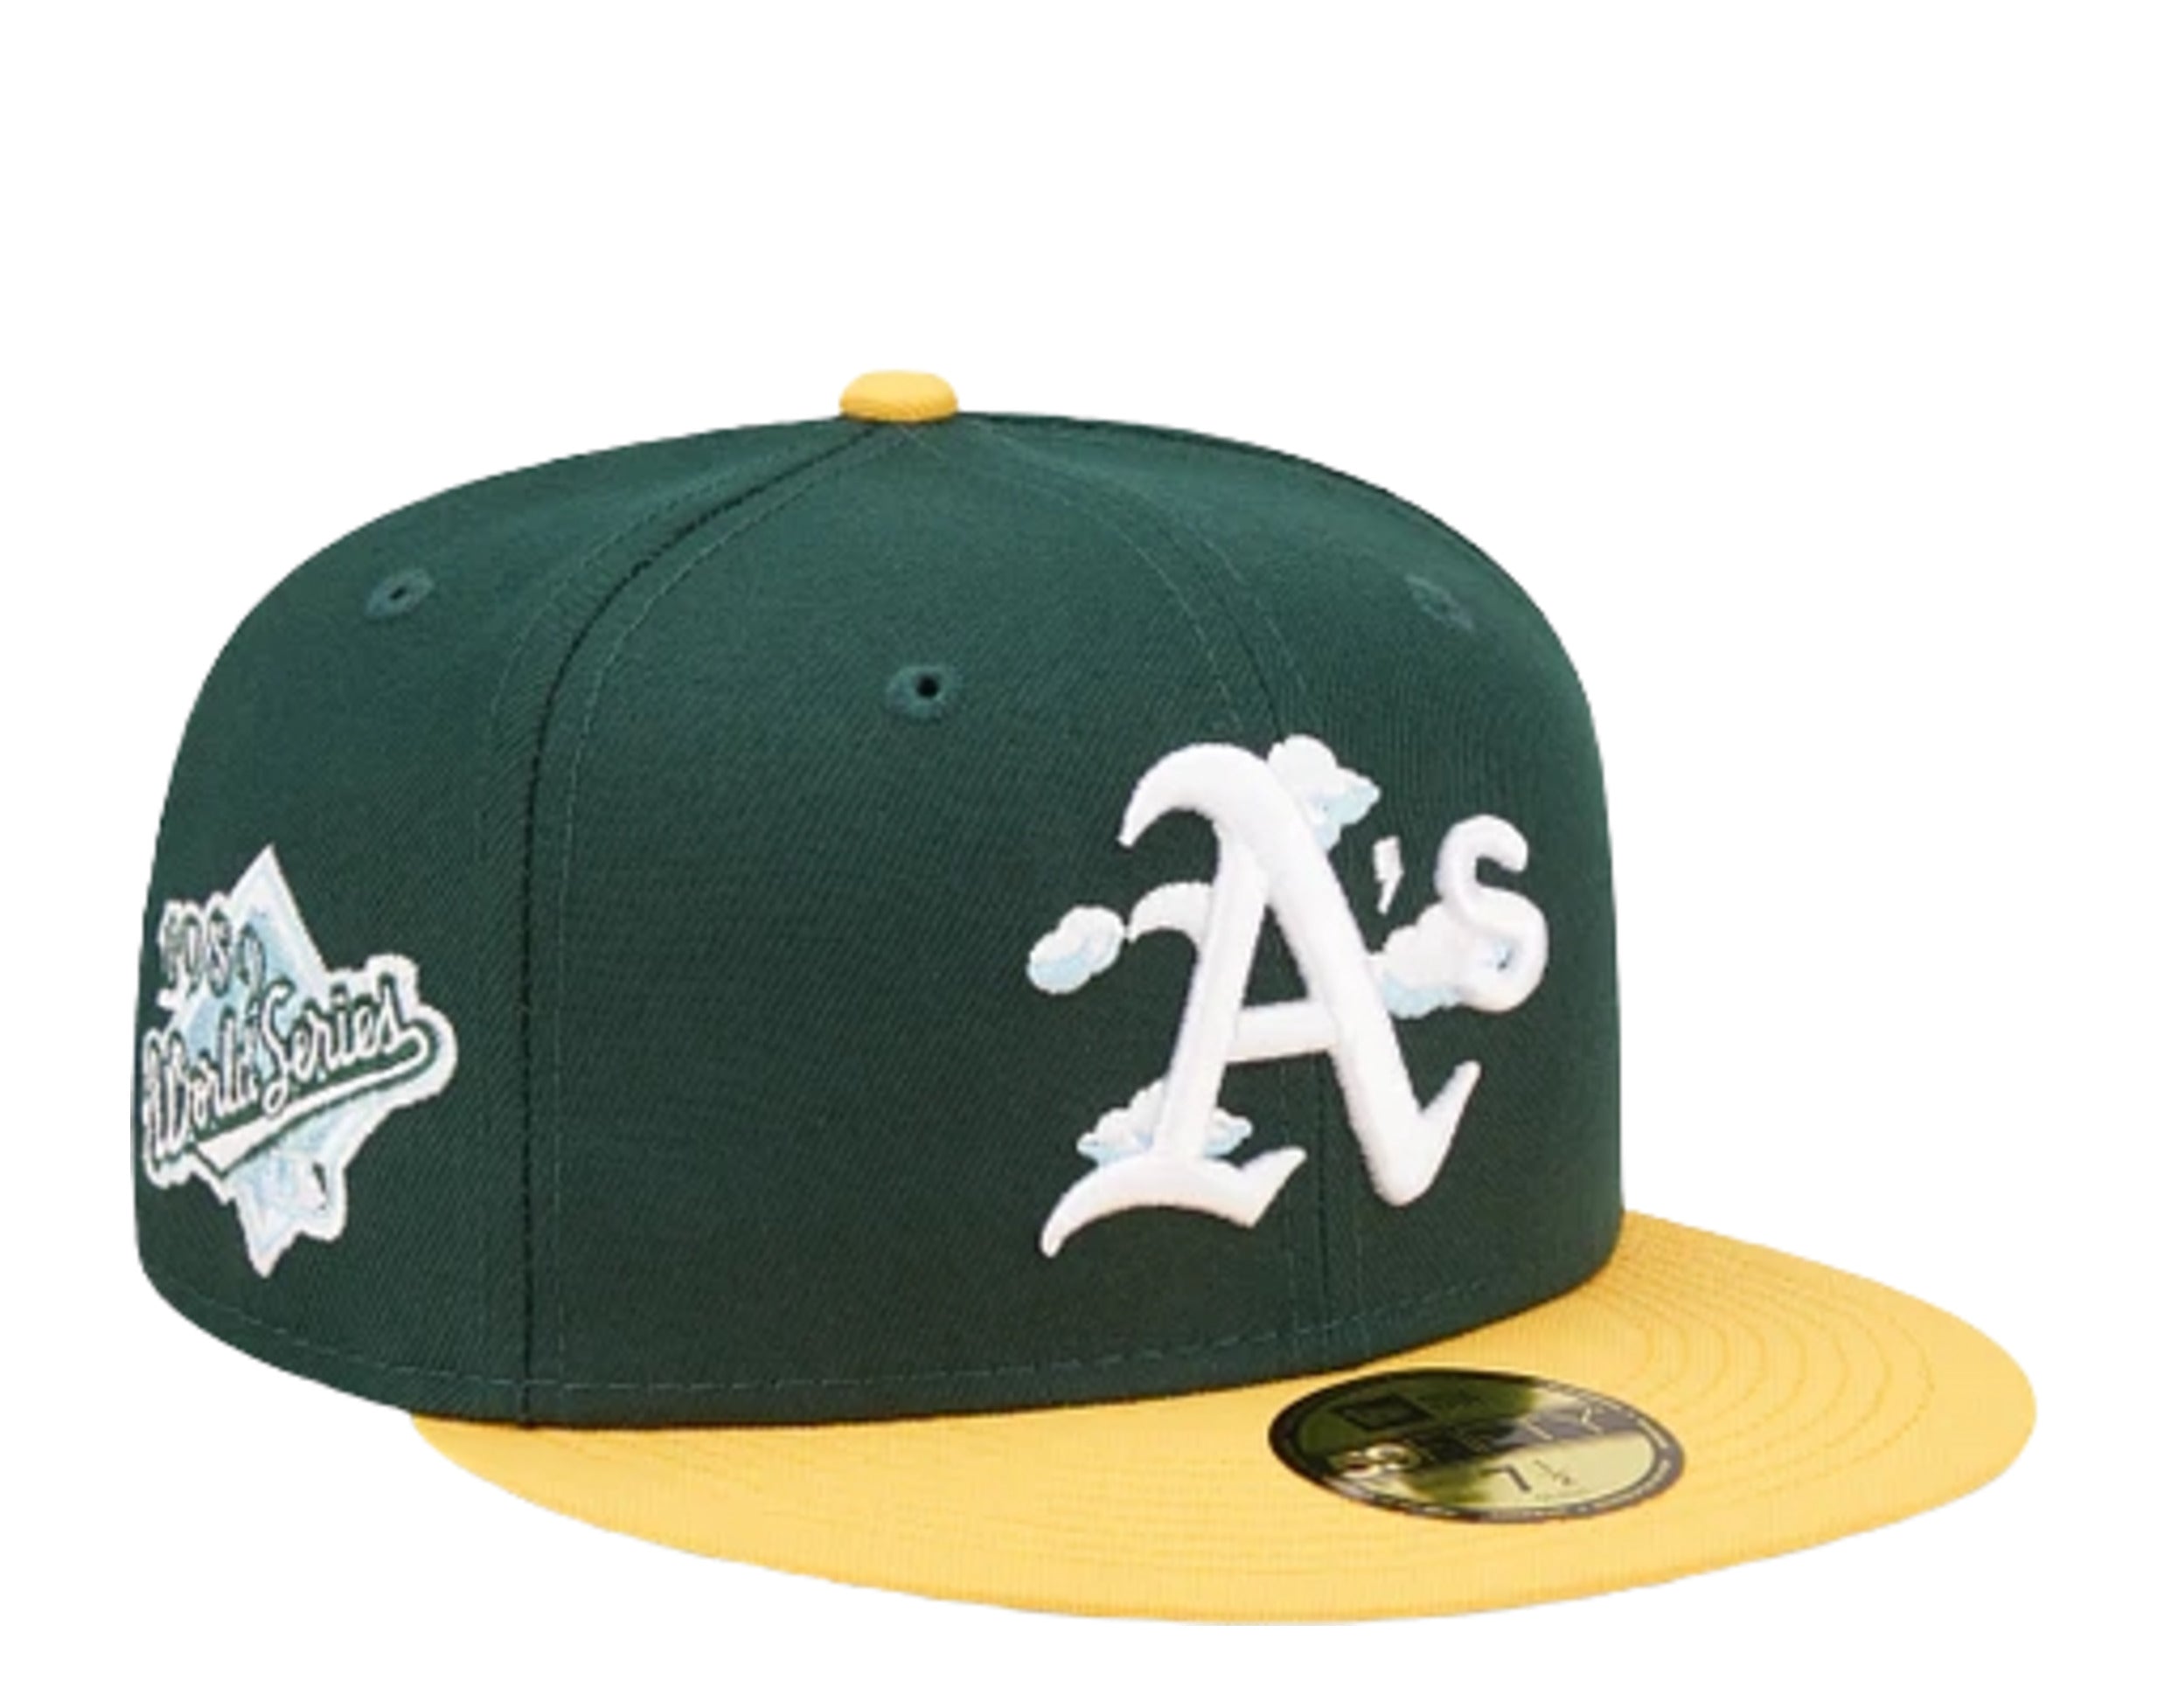 New Era Oakland Athletics MLB Fan Shop